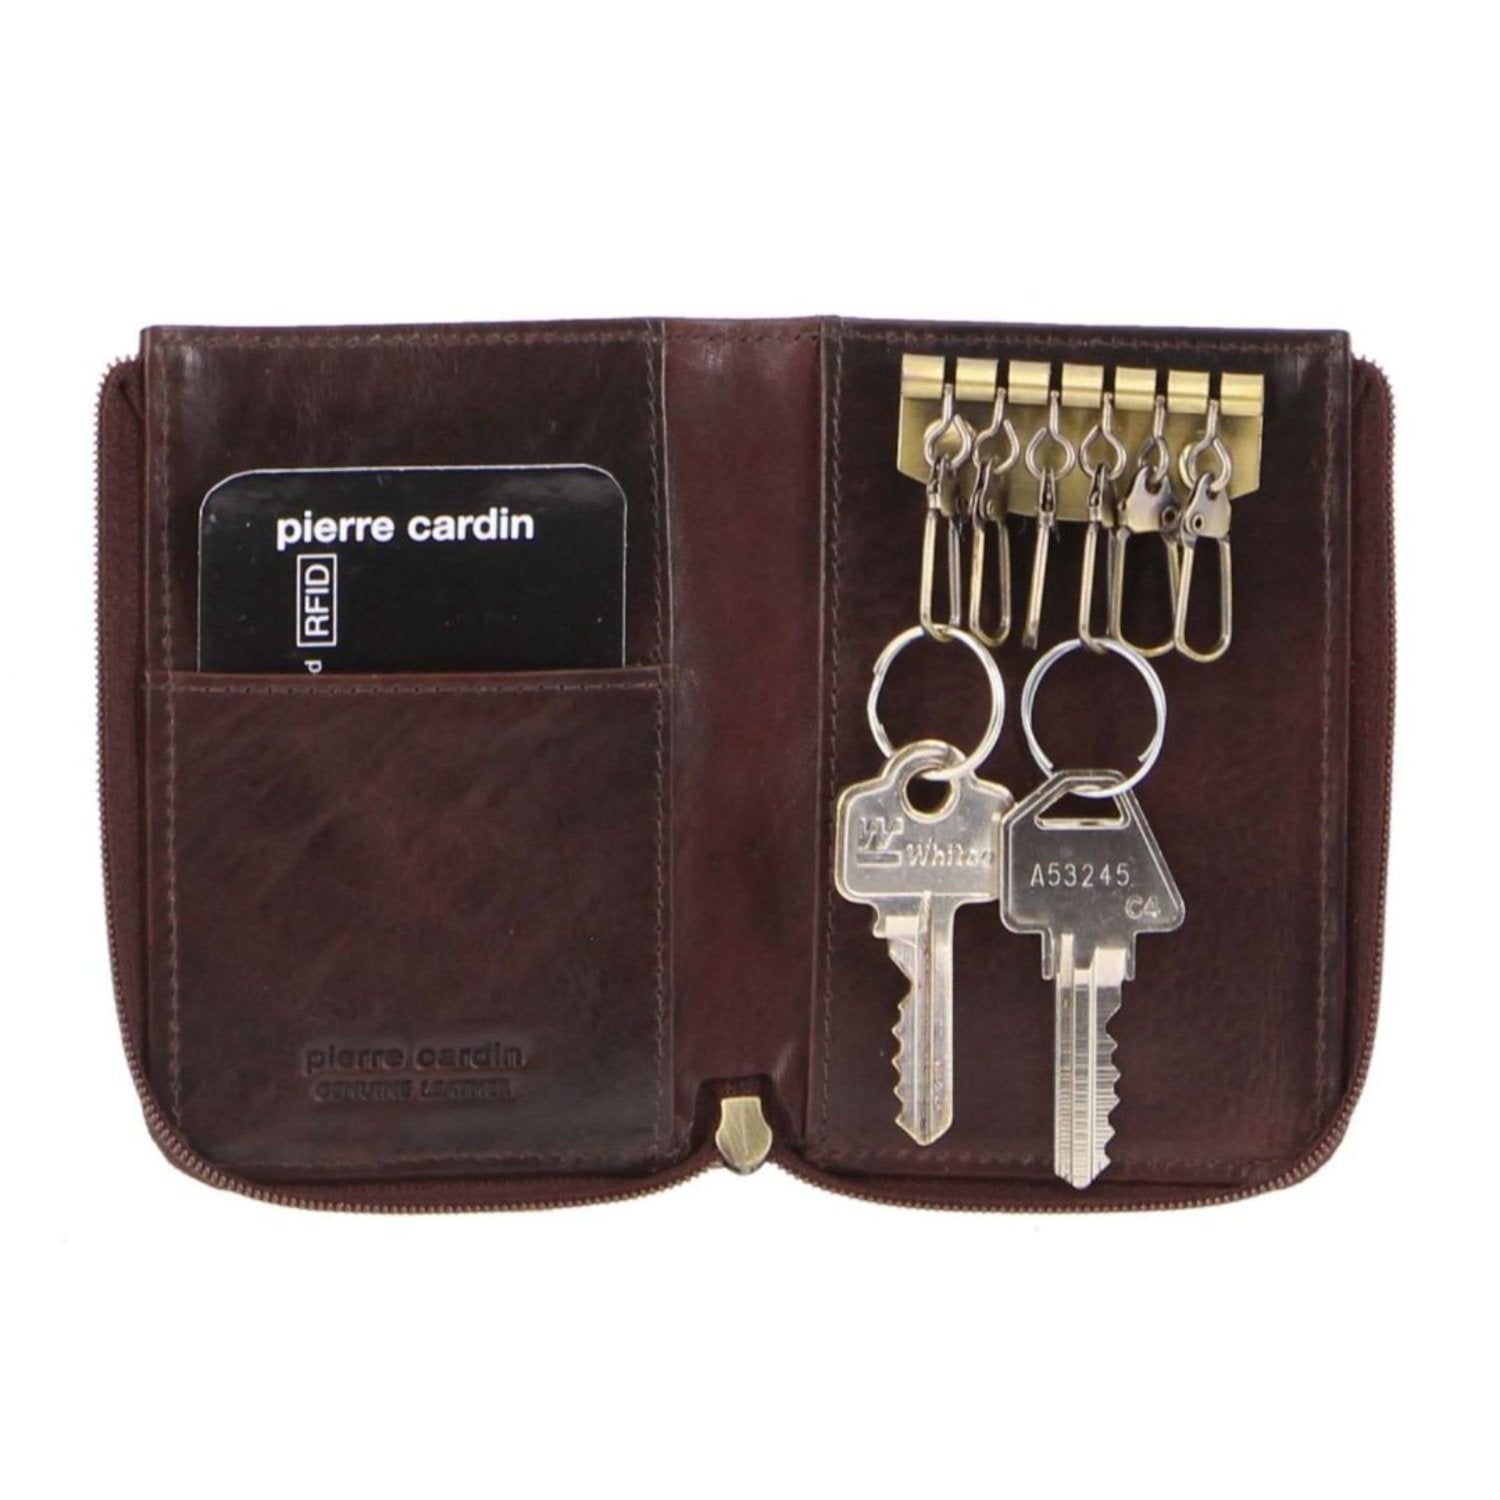 Pierre Cardin Italian Leather Key + Credit Card Holder in Chocolate